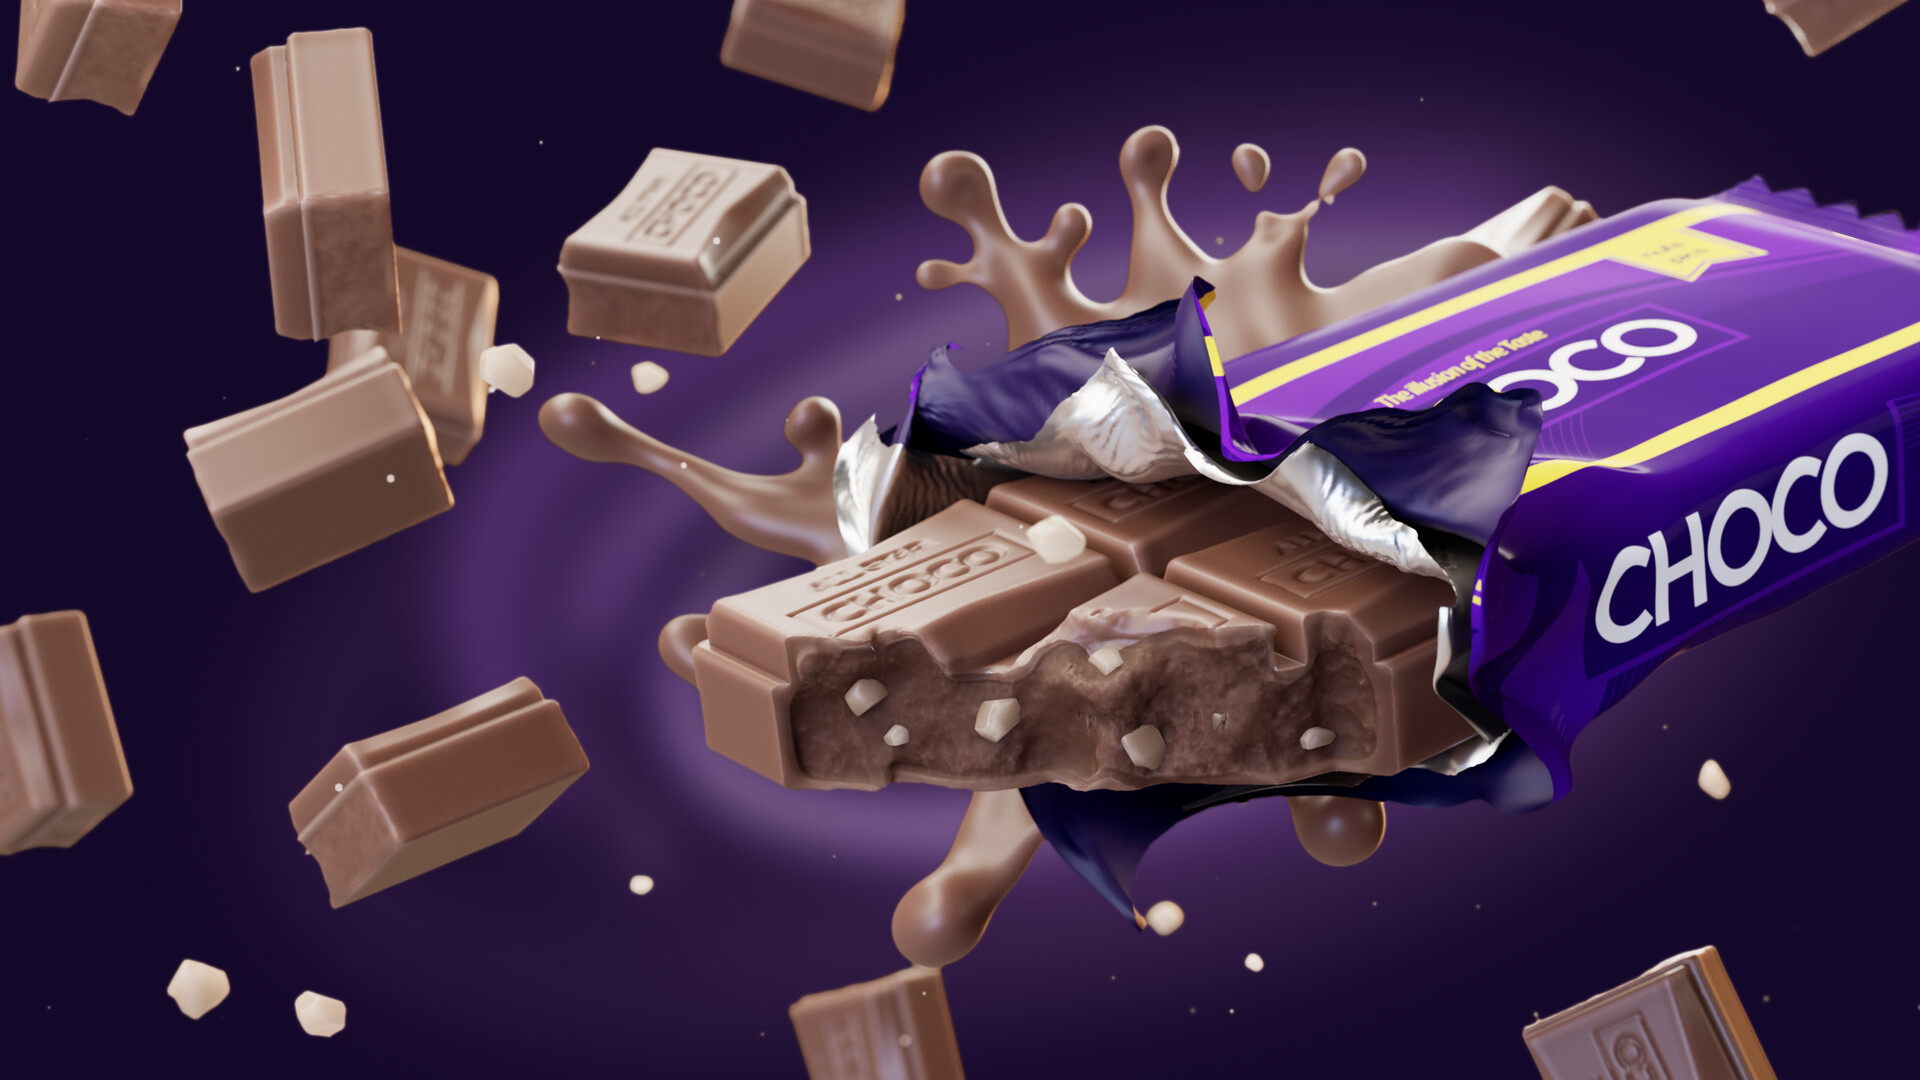 ArtStation - Choco Chocolate - 3D Product modeling